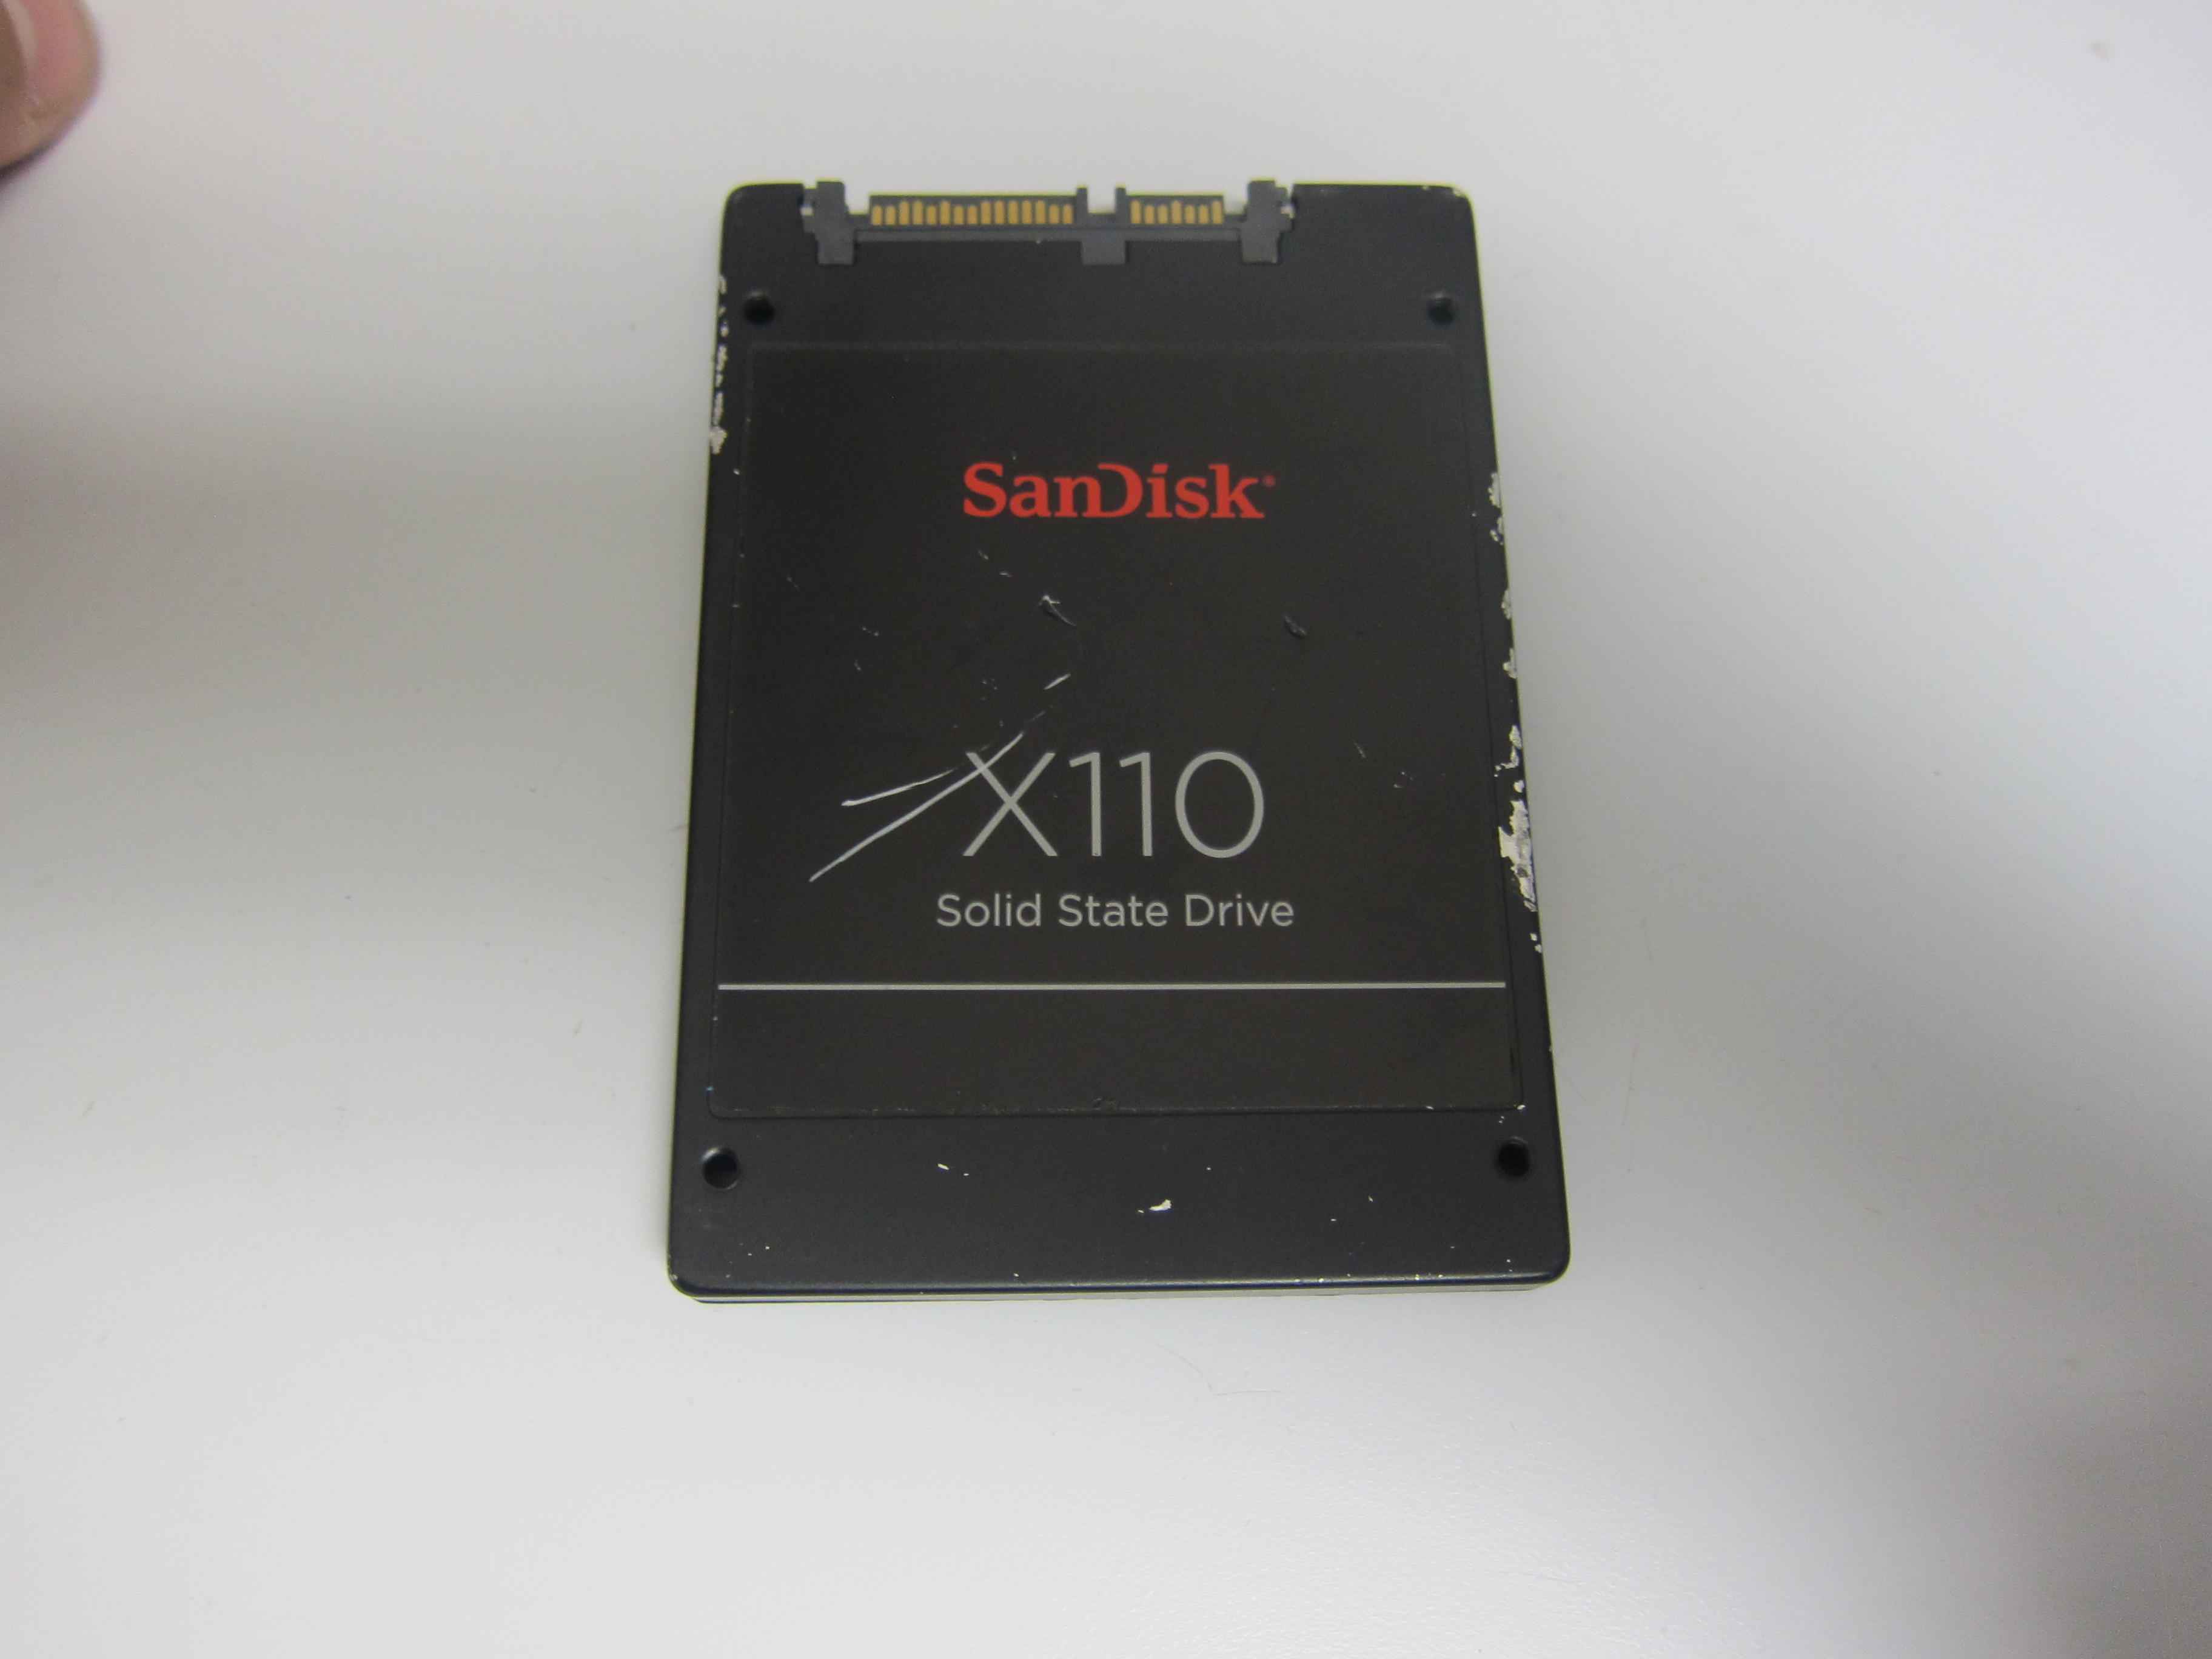 SanDisk 128GB MLC SATA 6Gbps 2.5" SSD | SD6SB1M-128G-1006 | eBay